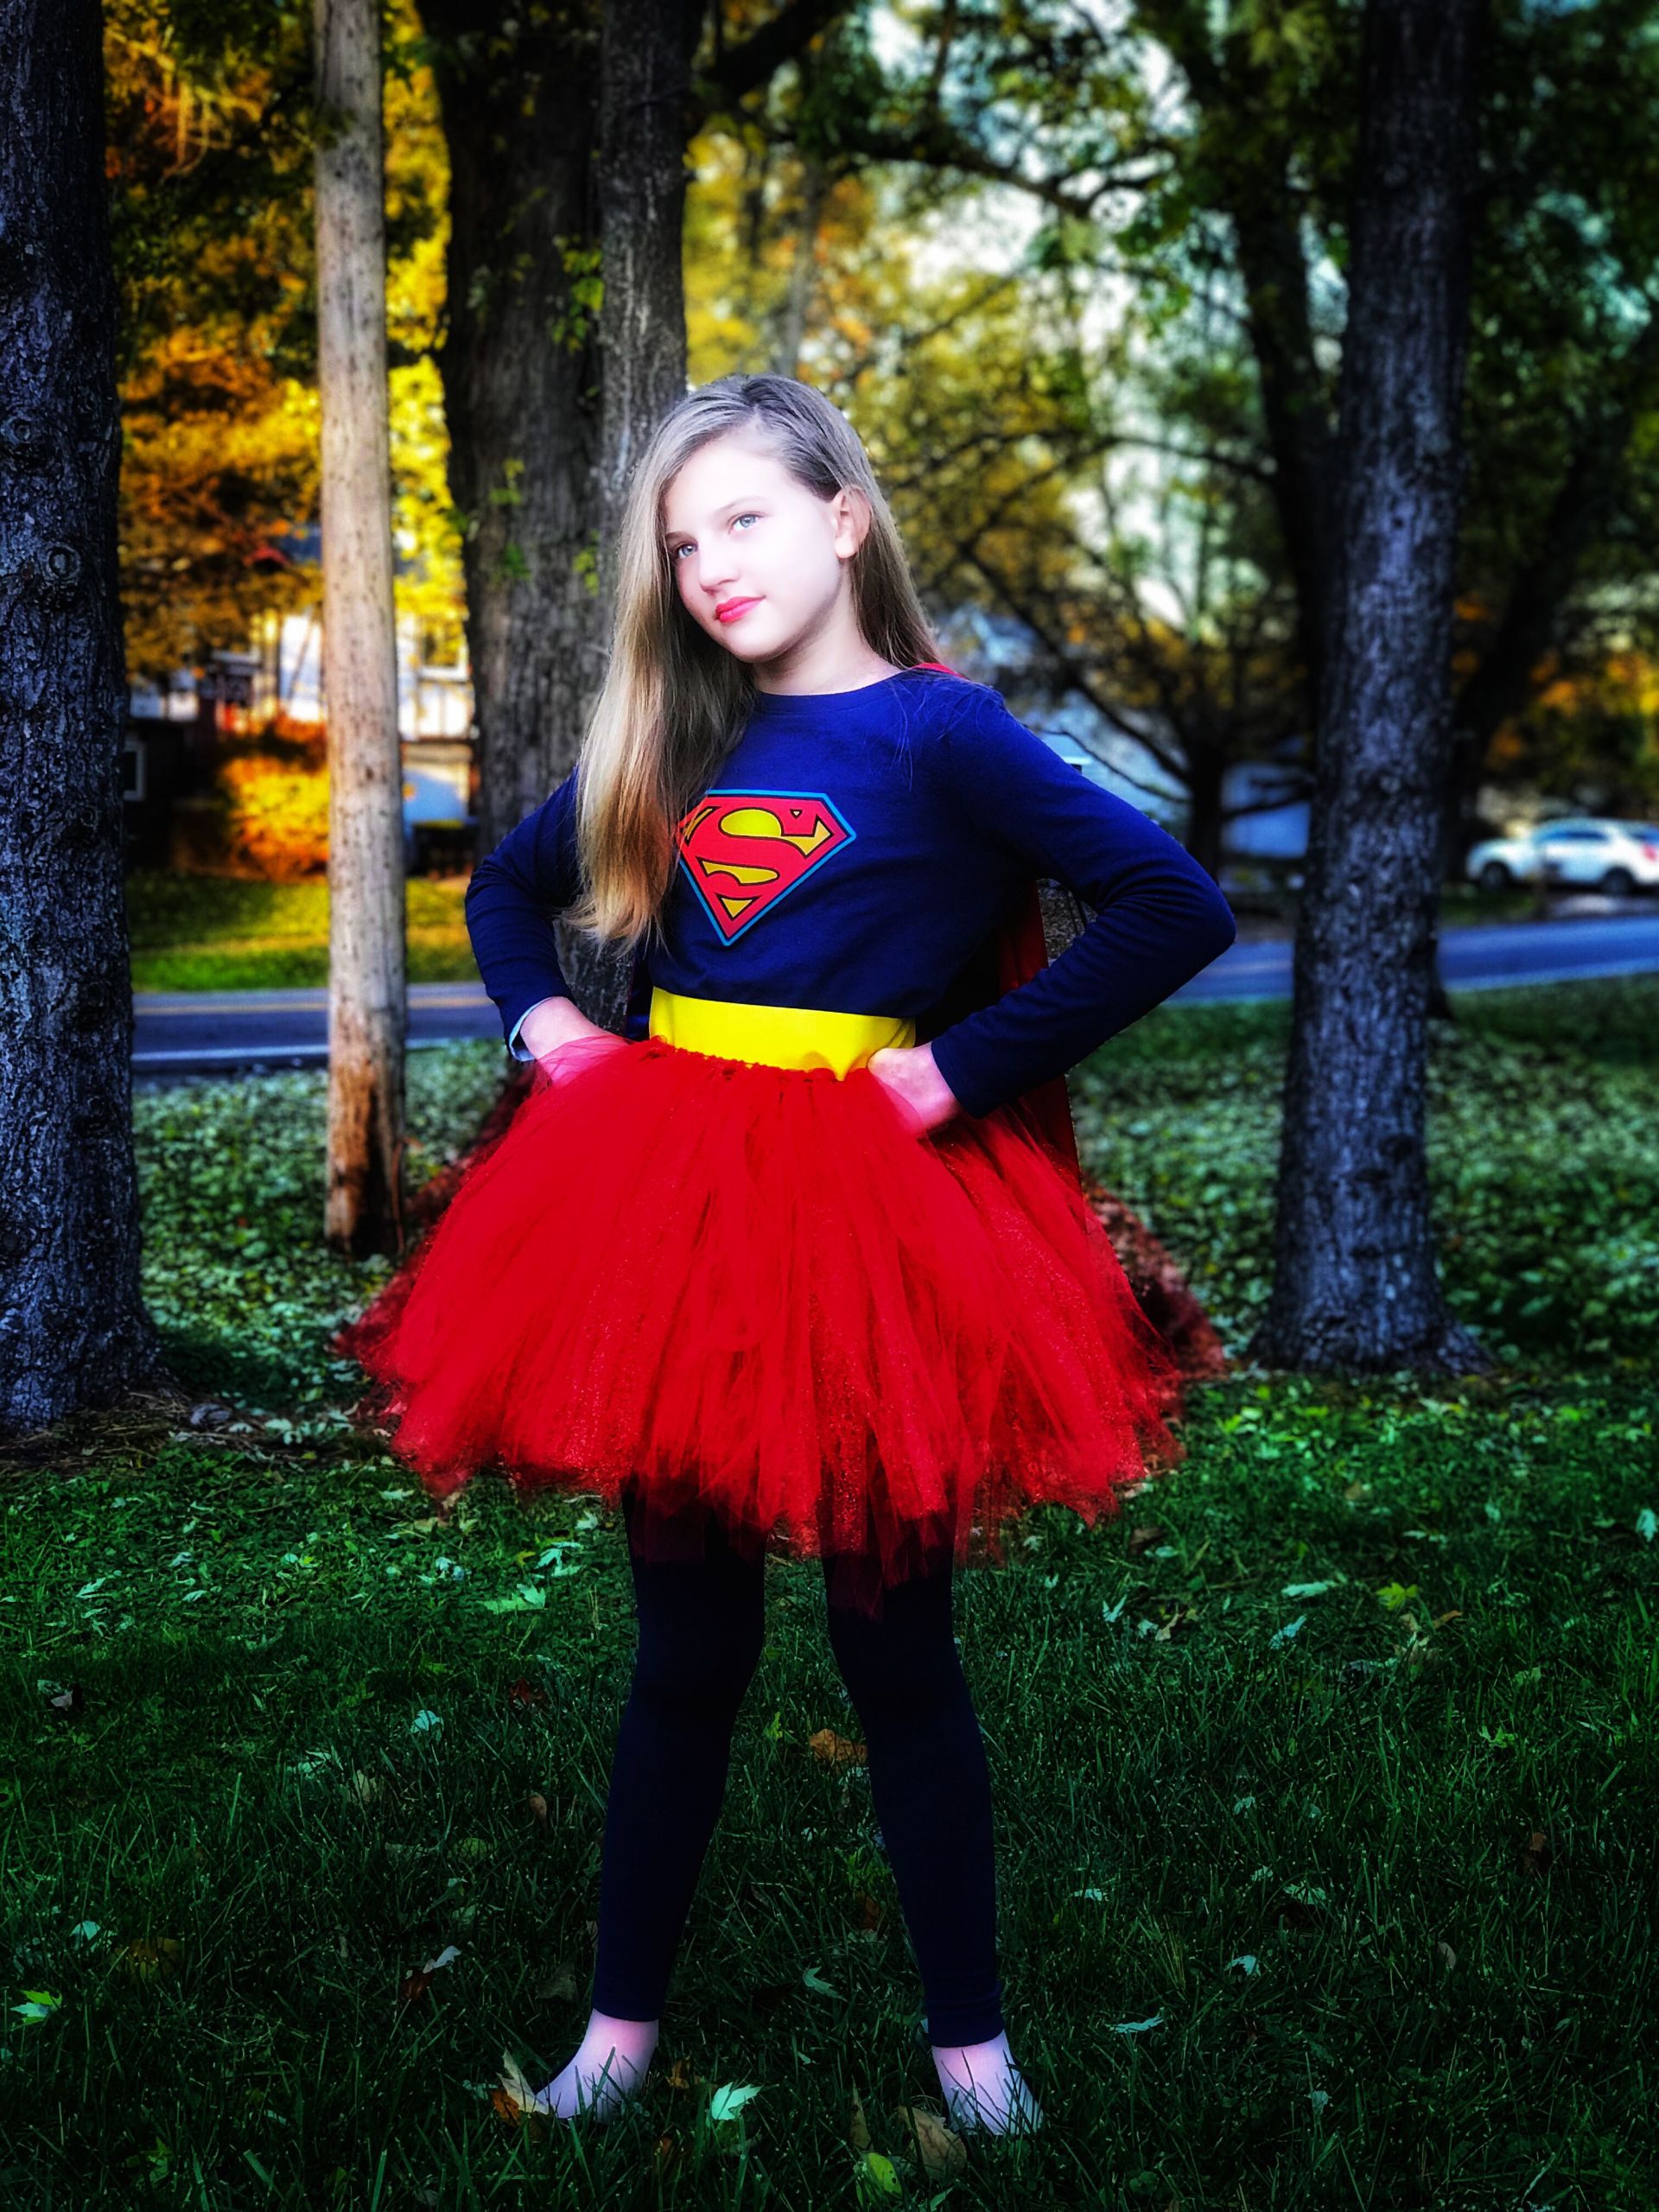 Supergirl Costume DIY
 DIY Supergirl Halloween Costume With images